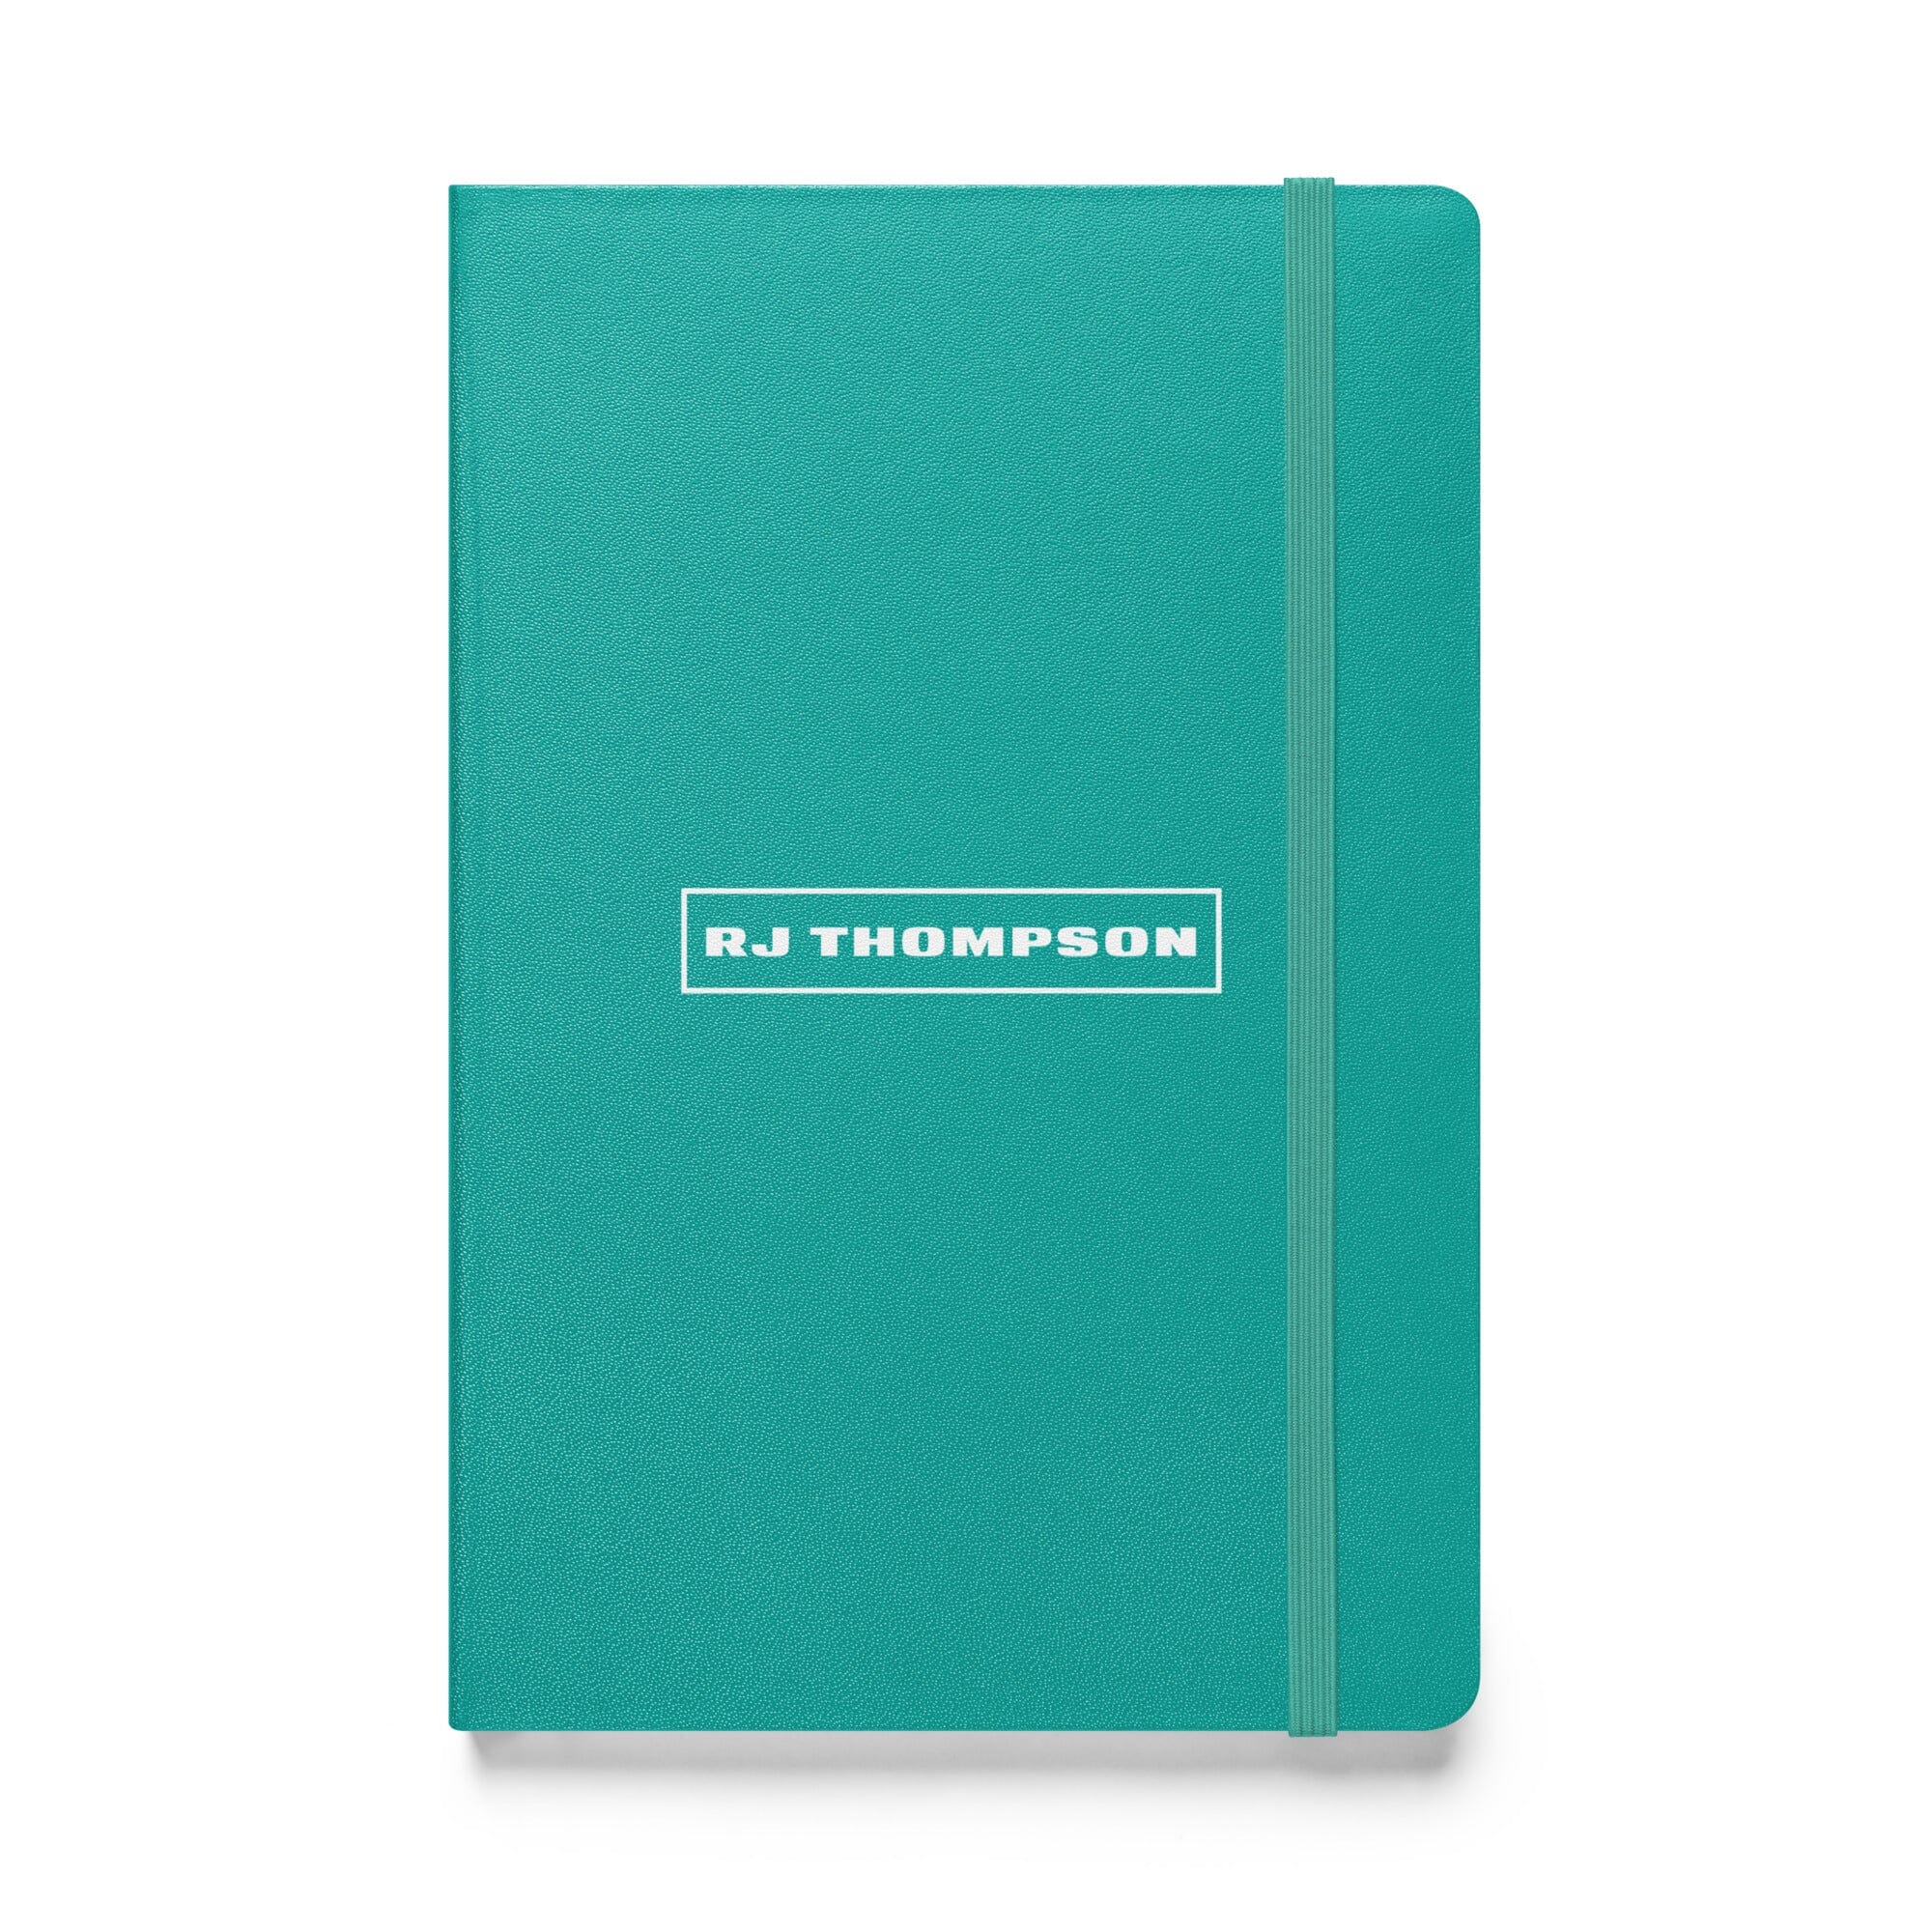 "RJ Thompson" Hardcover Bound Notebook | RJ Thompson | Official Website & Store